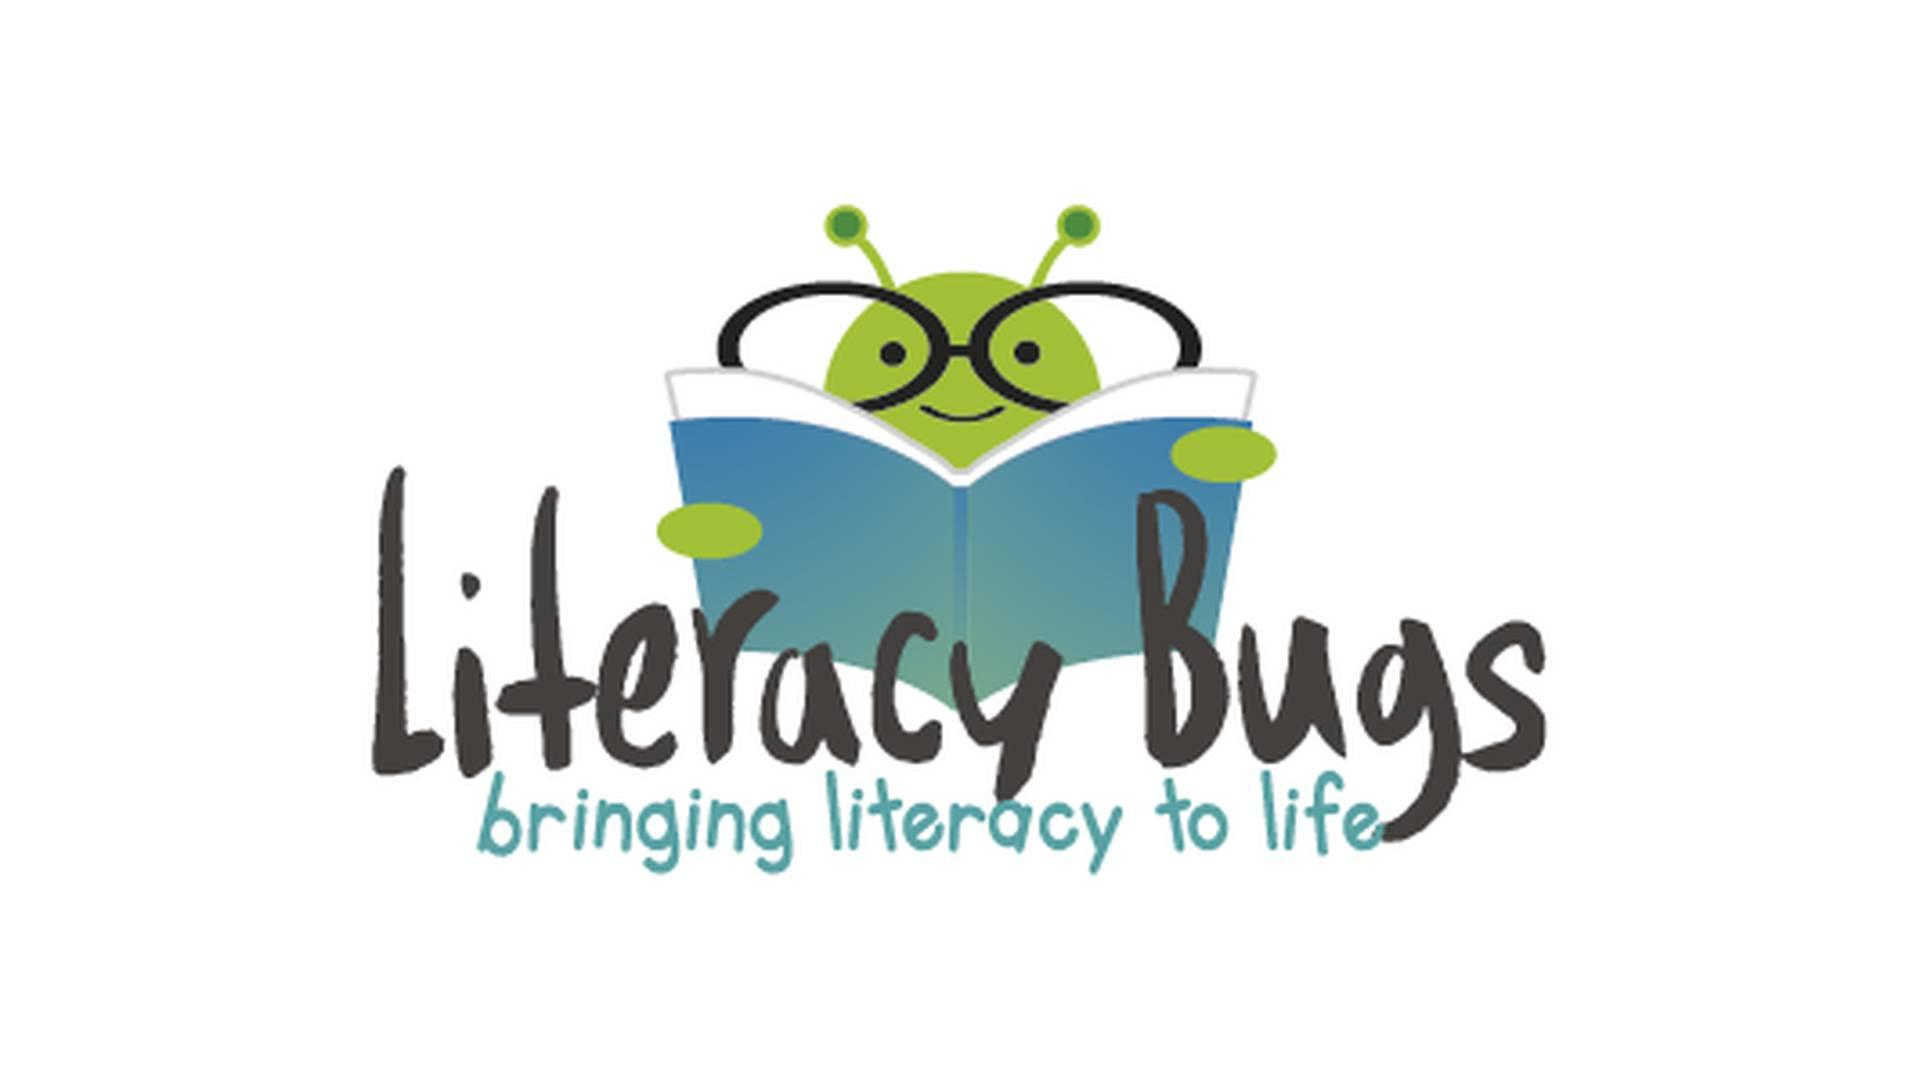 Literacy Bugs photo